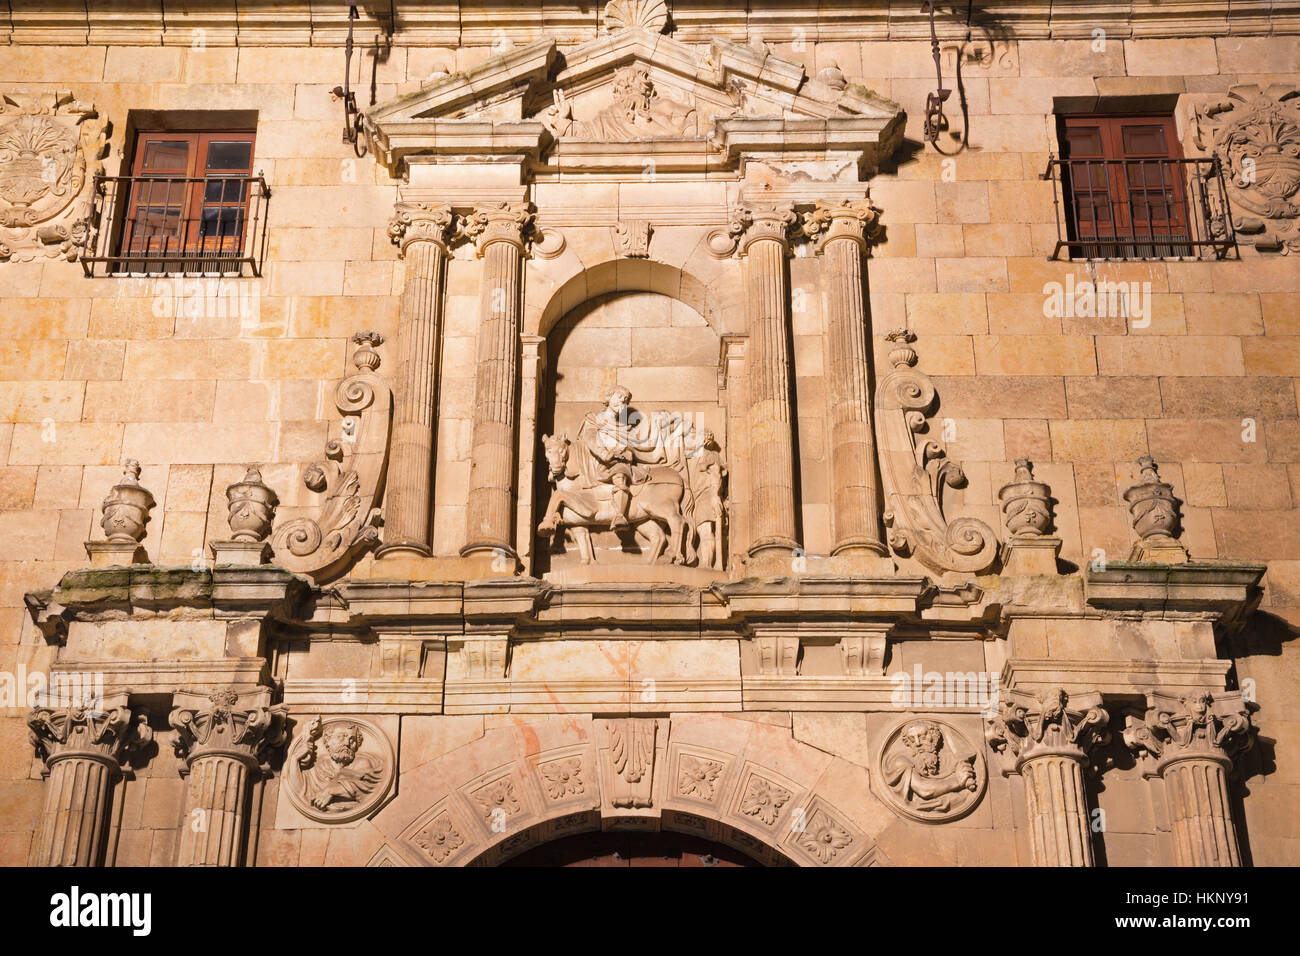 SALAMANCA, SPAIN, APRIL - 17, 2016: The renaissance - baroque (plateresque) portal of church Iglesia de San Marin (1586). Stock Photo